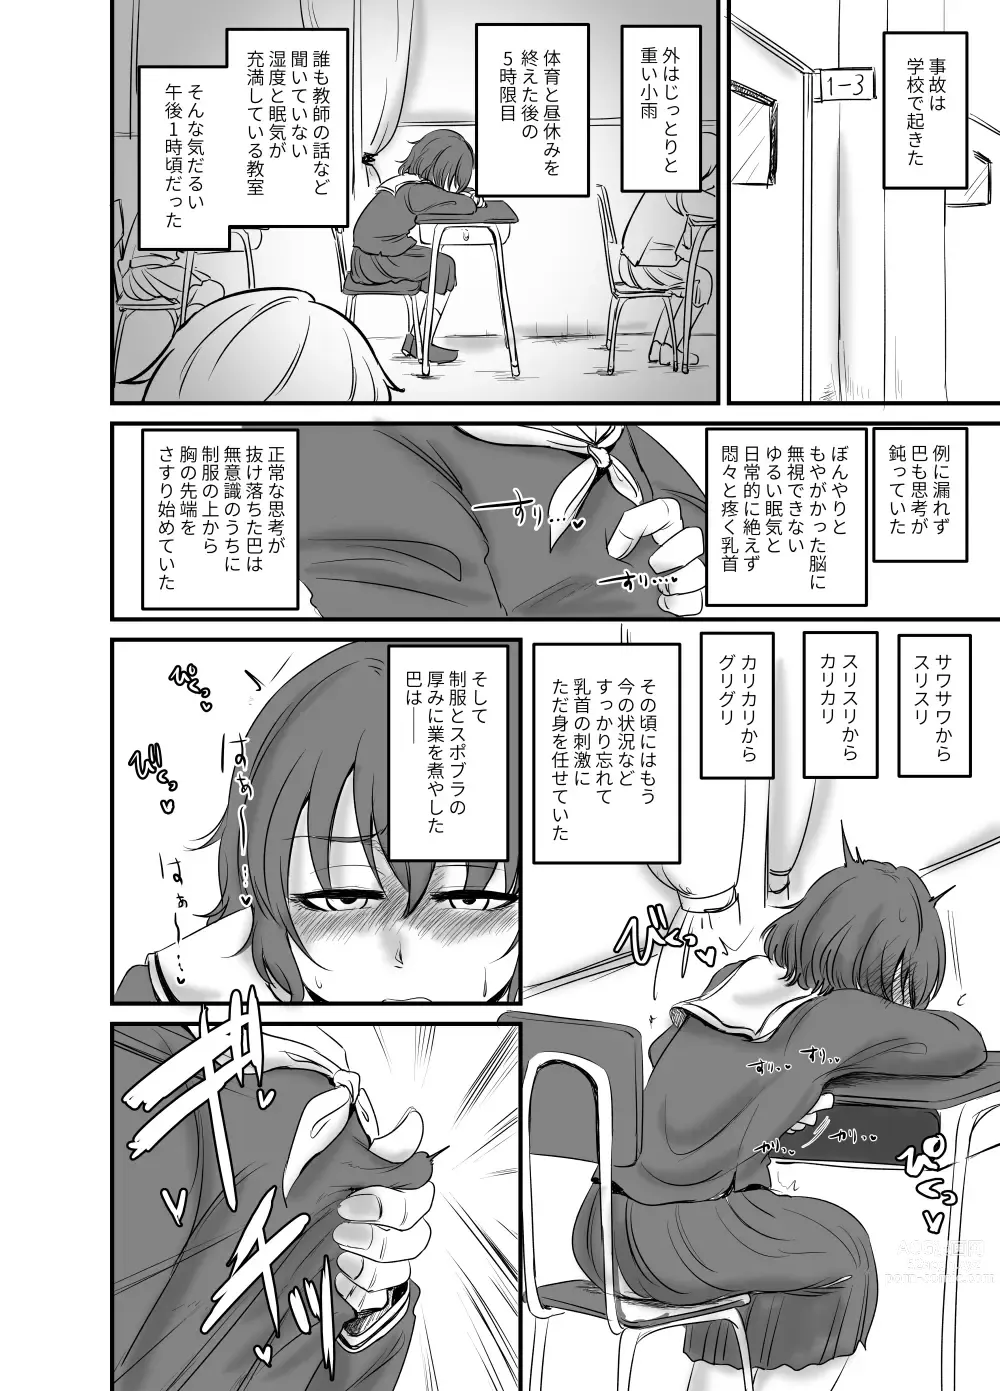 Page 17 of imageset Daisaku (4213608) Part 2